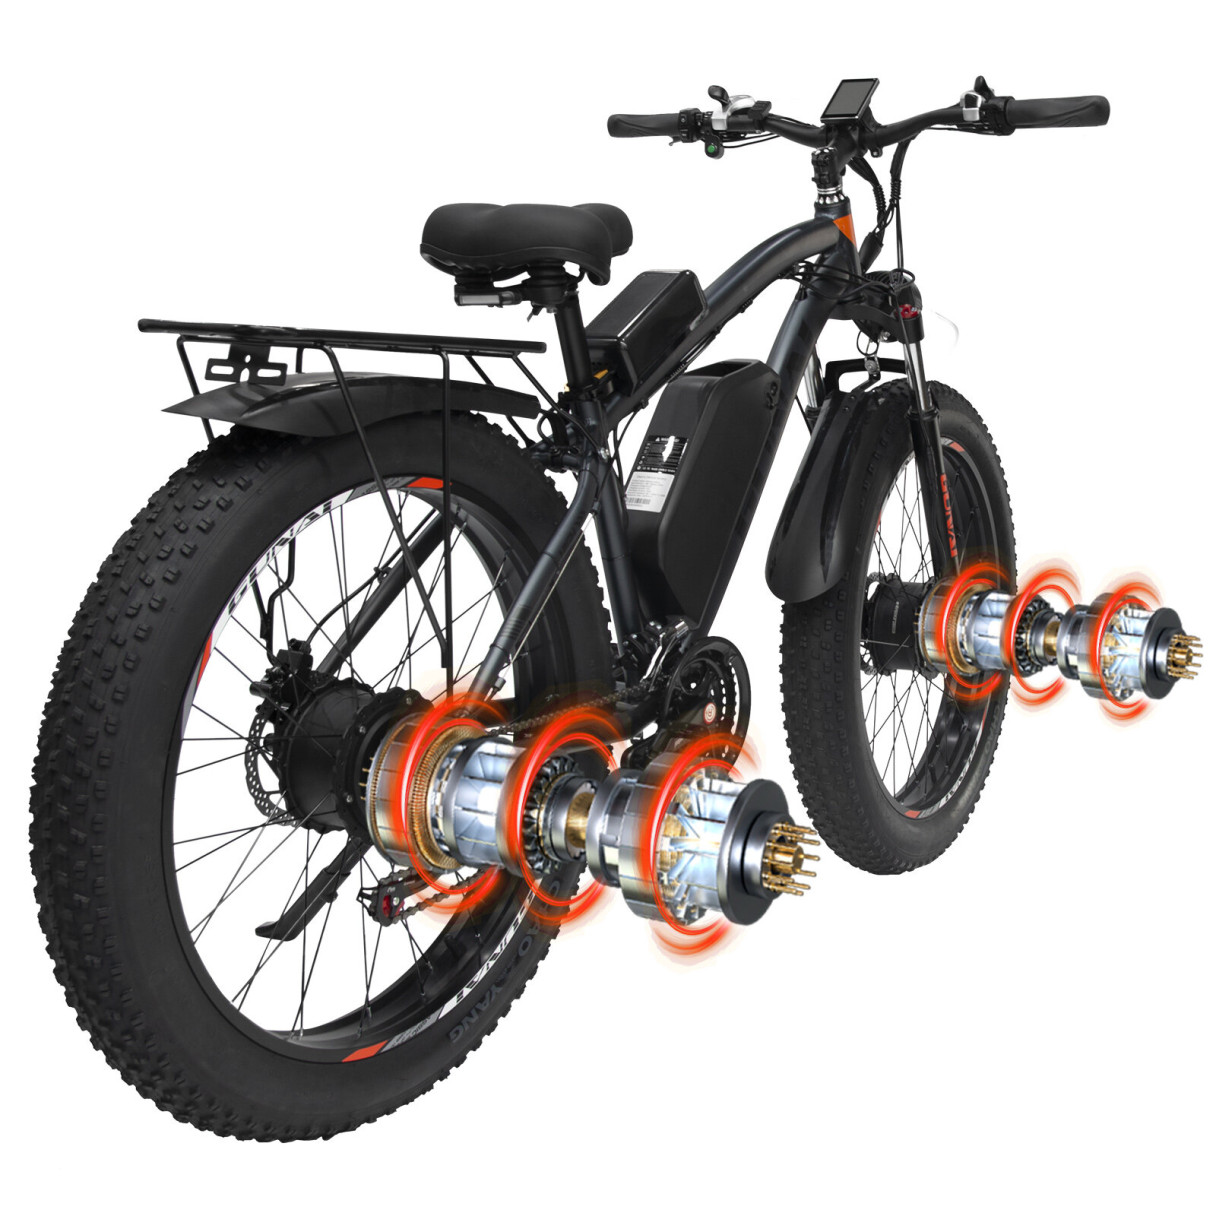 [EU DIRECT] GUNAI GN88 Electric Bike 48V 22Ah Battery 1000W*2 Dual Motors 26*4.0inch Fat Tires 70-130KM Mileage Range 150KG Max Load Electric Bicycle